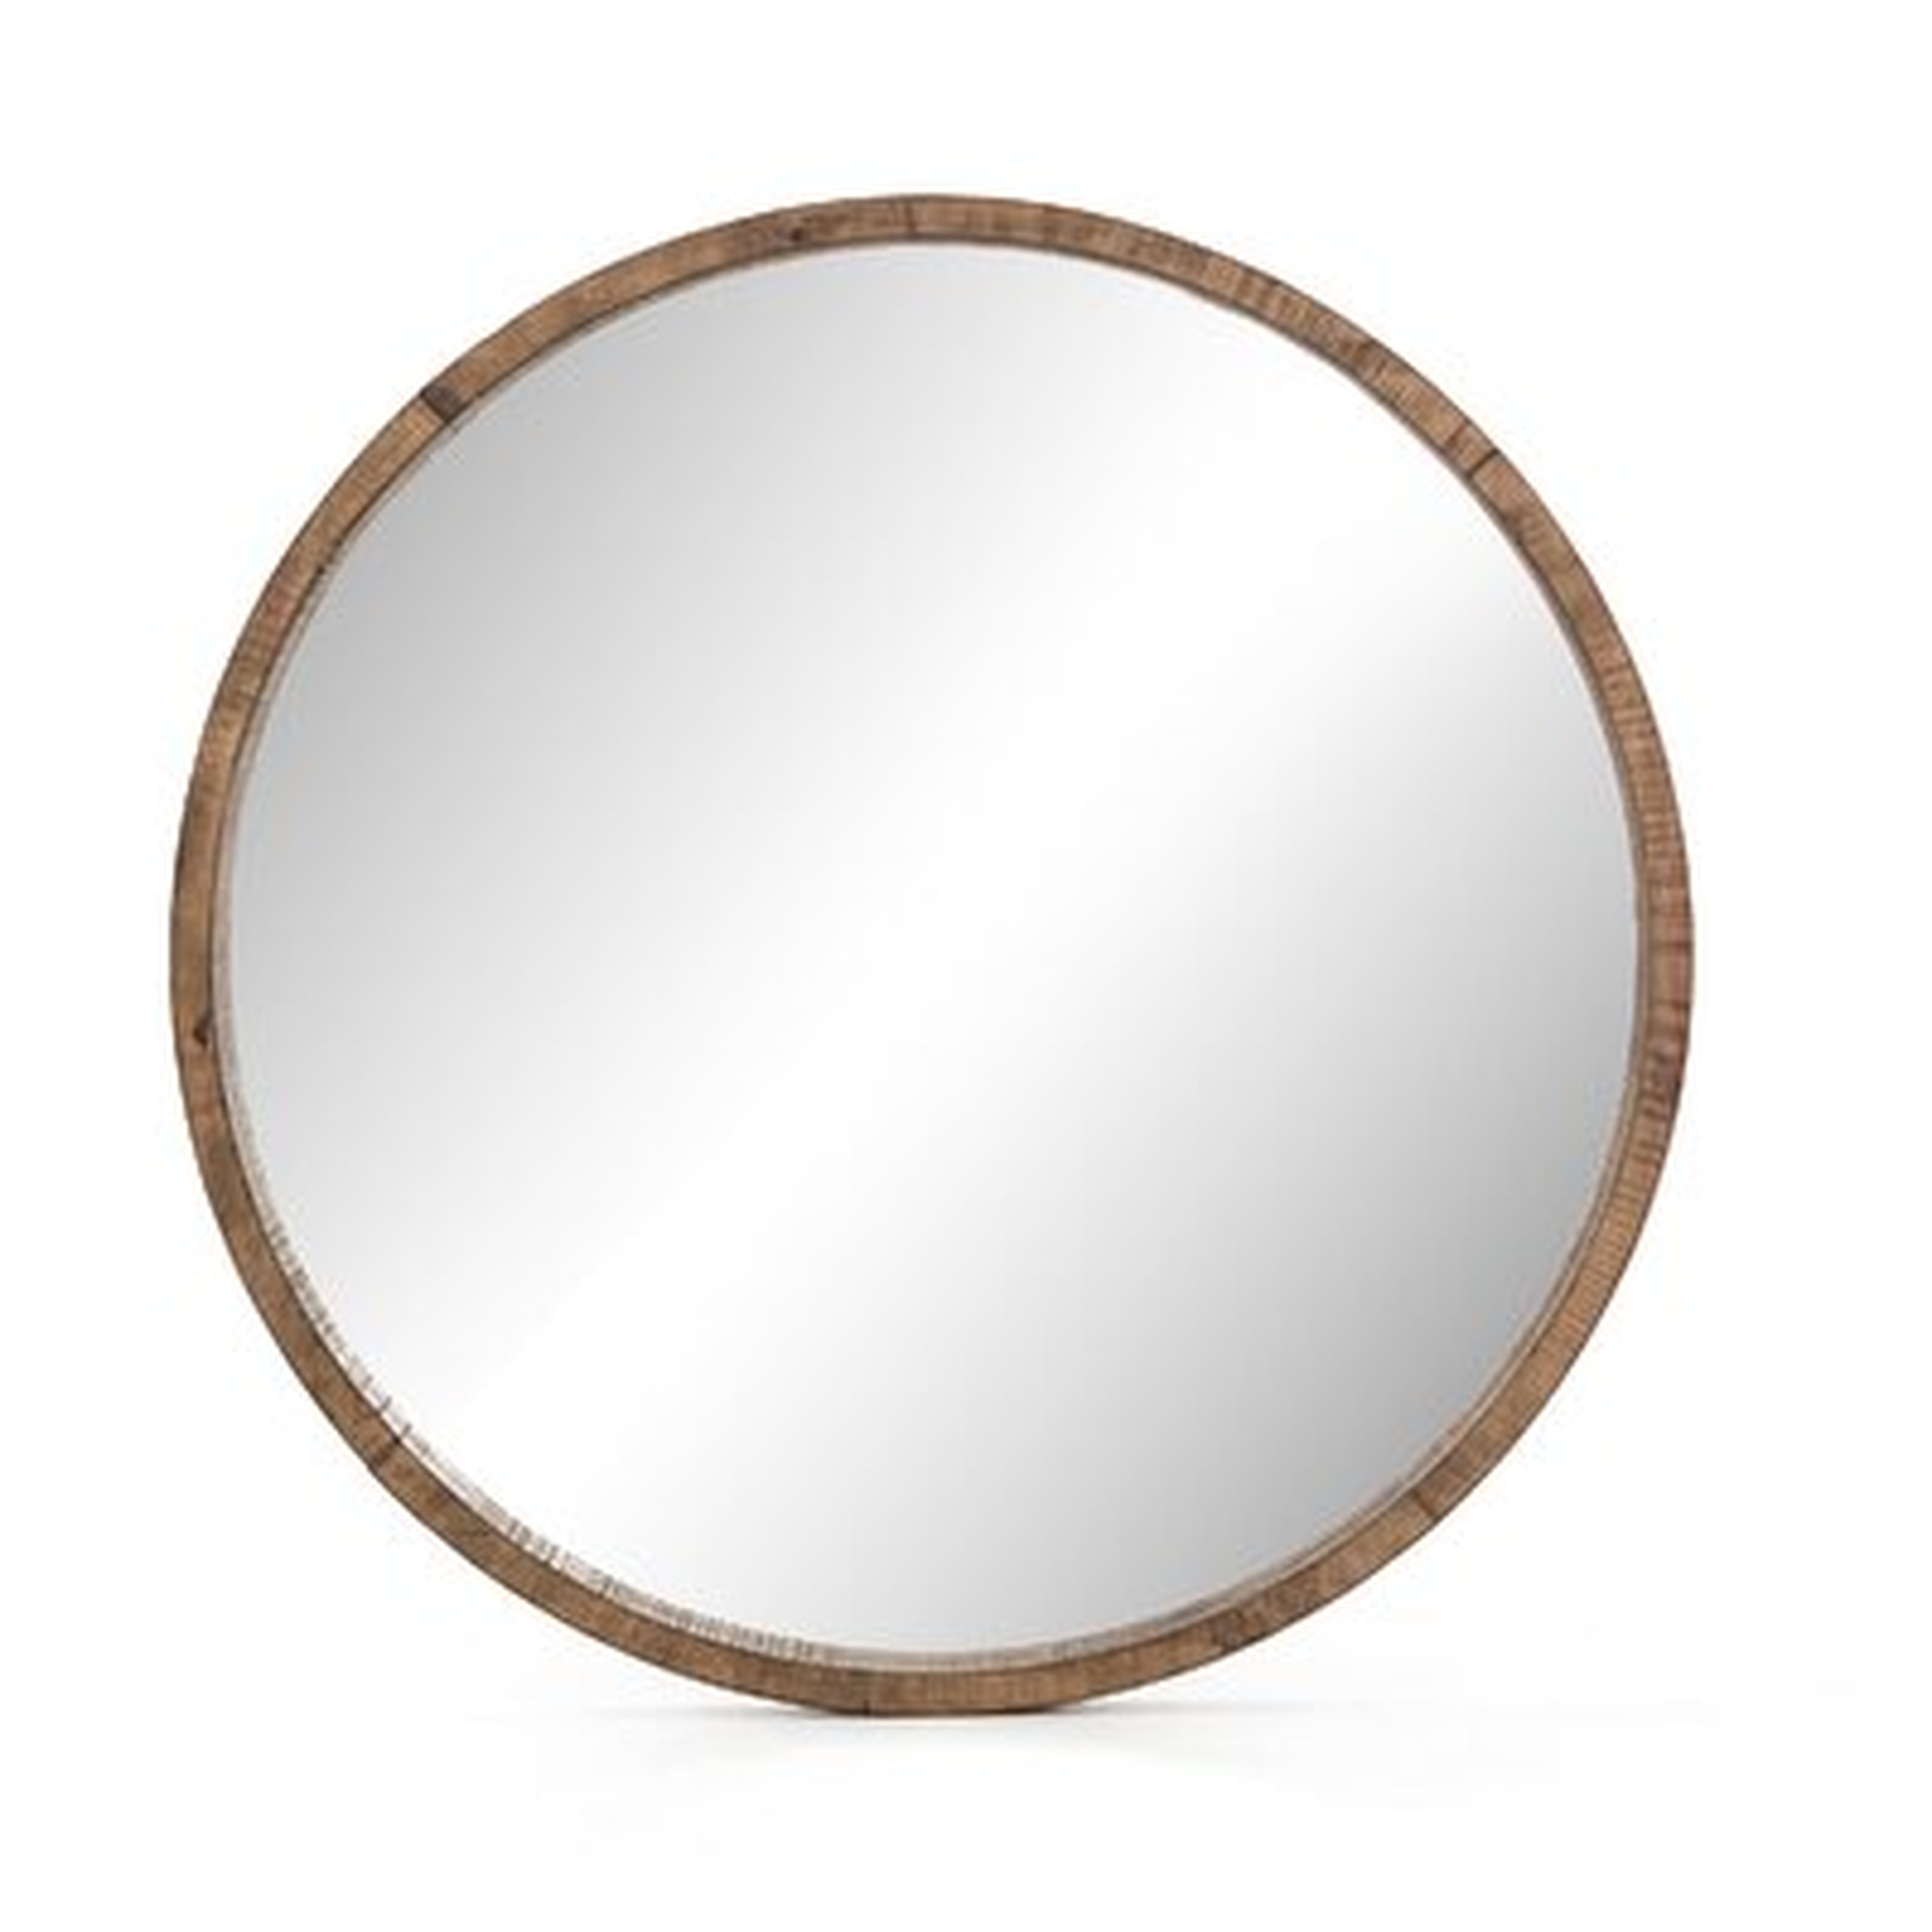 Creline Harlan Round Rustic Dresser Mirror - Wayfair